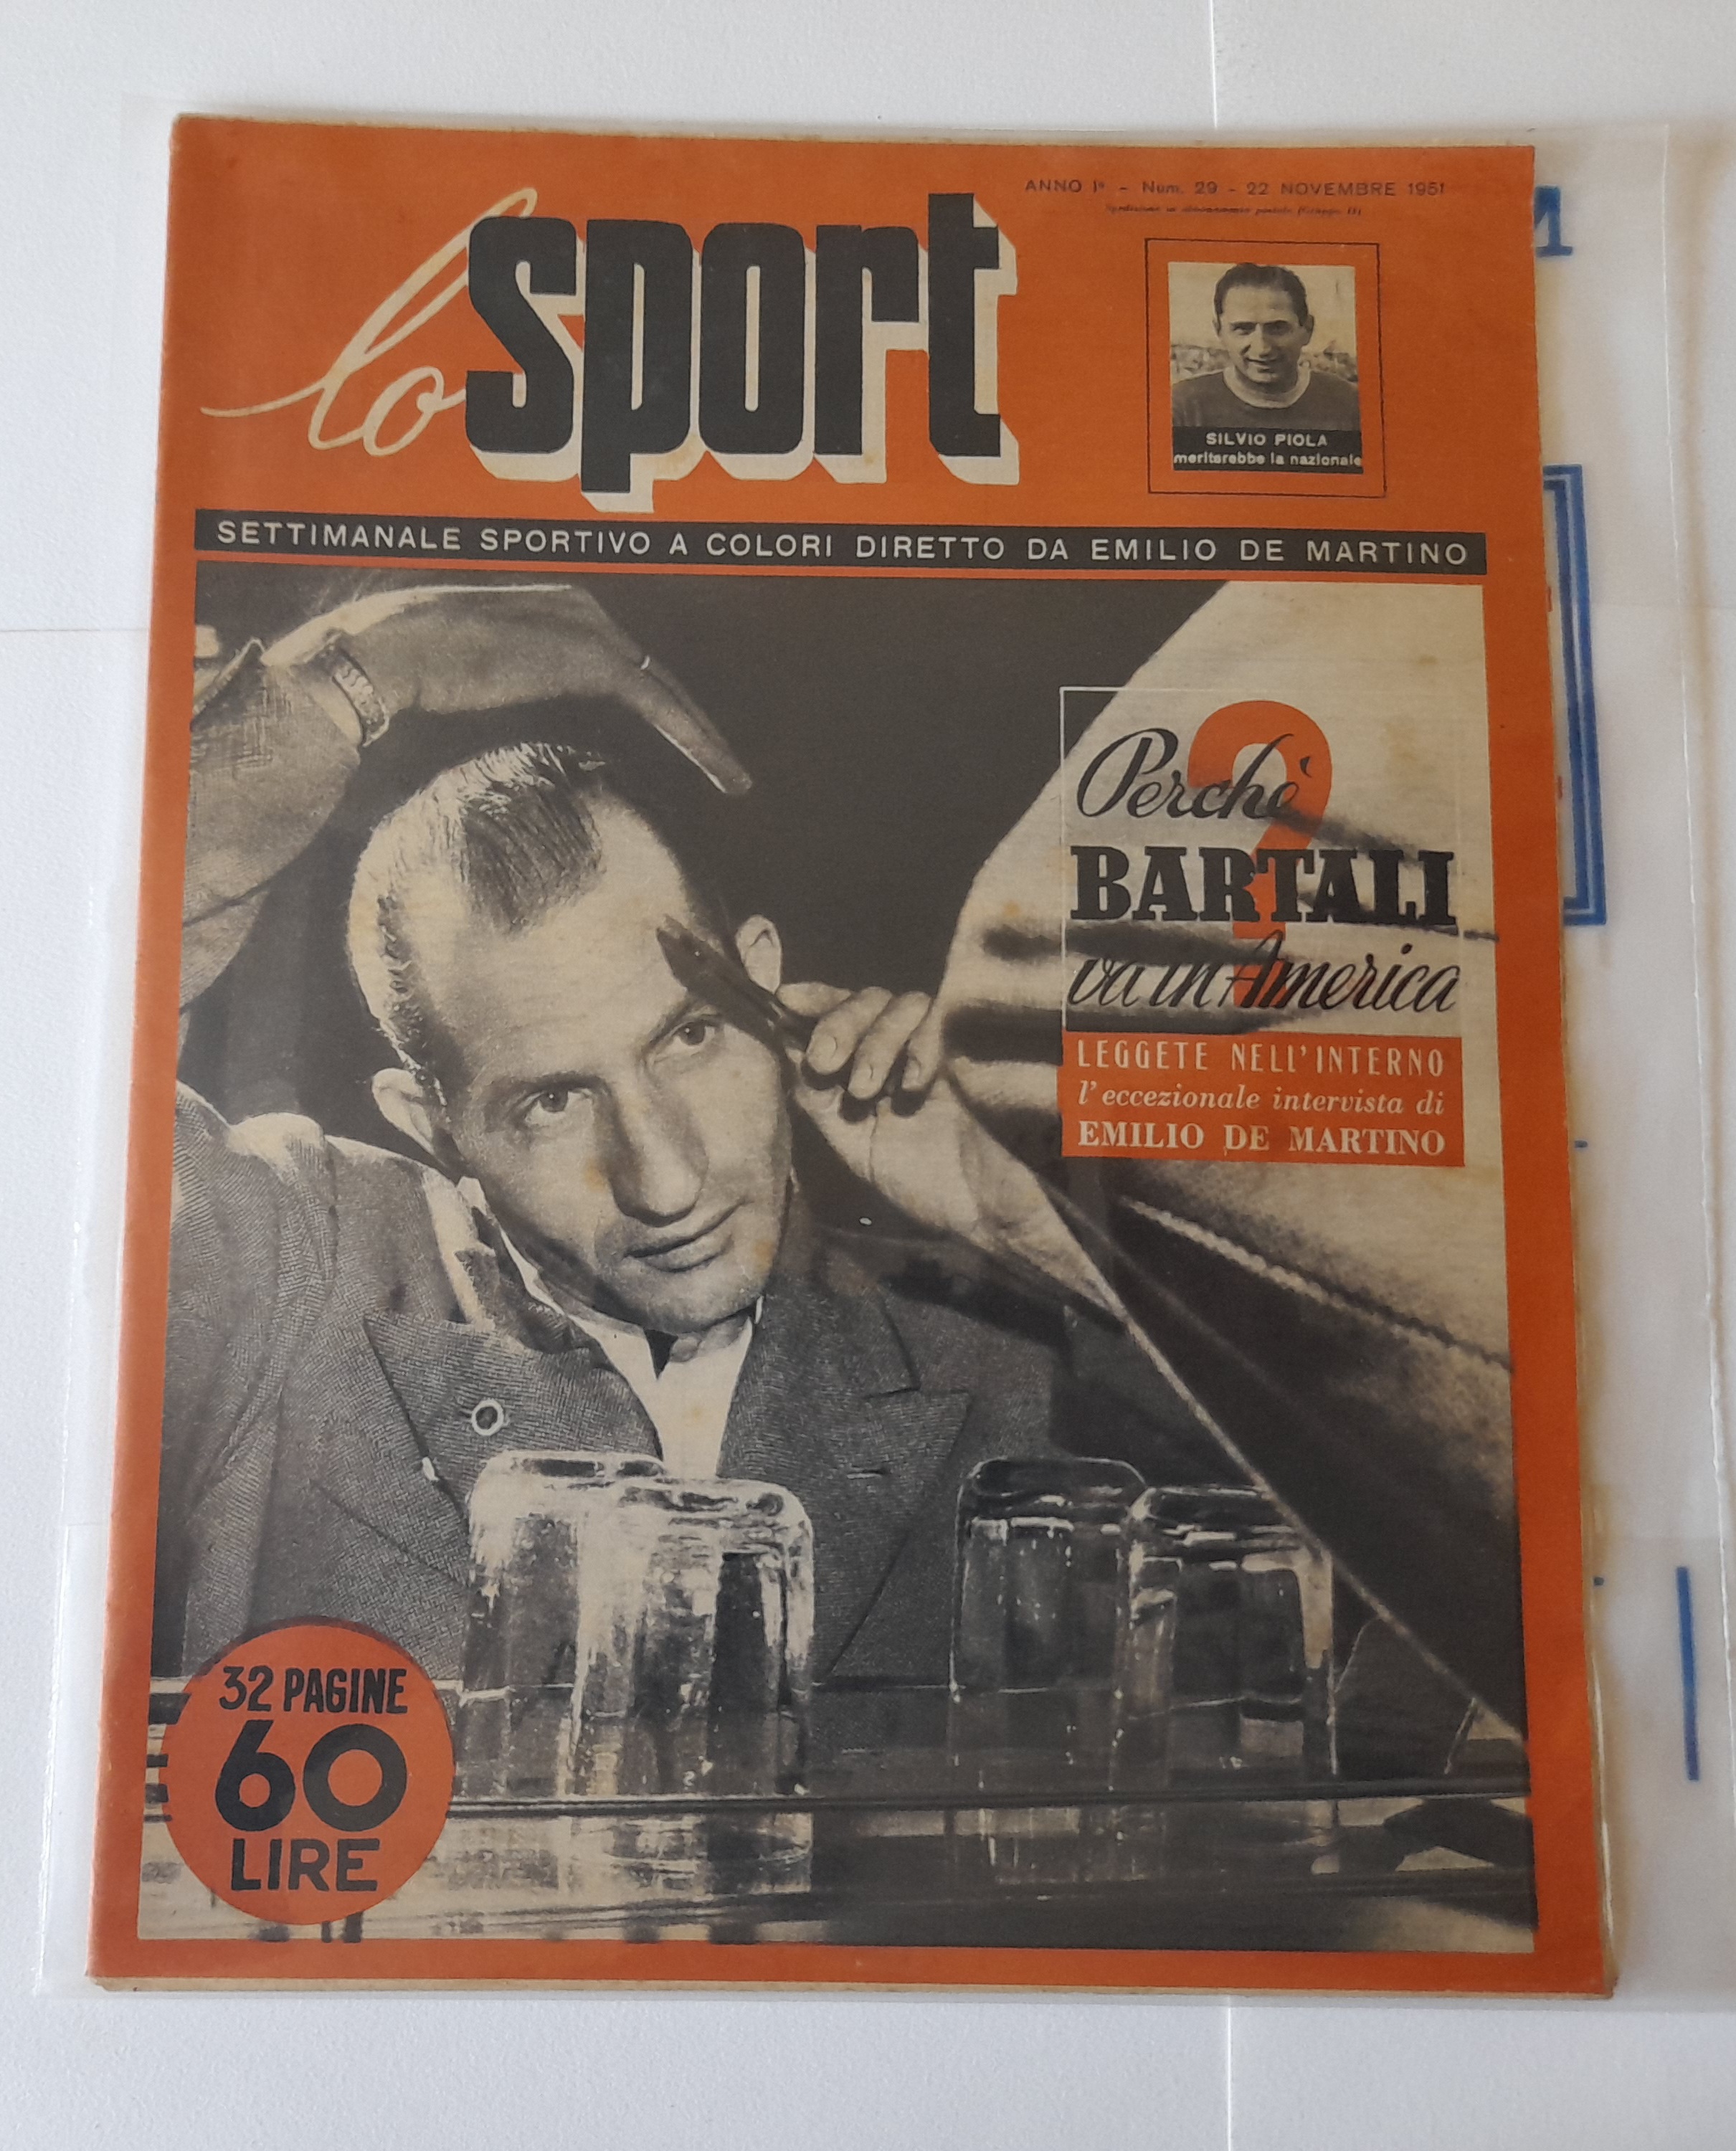 Lo Sport Sports Hebdomadaire n 29 novembre 1951 AZ 72